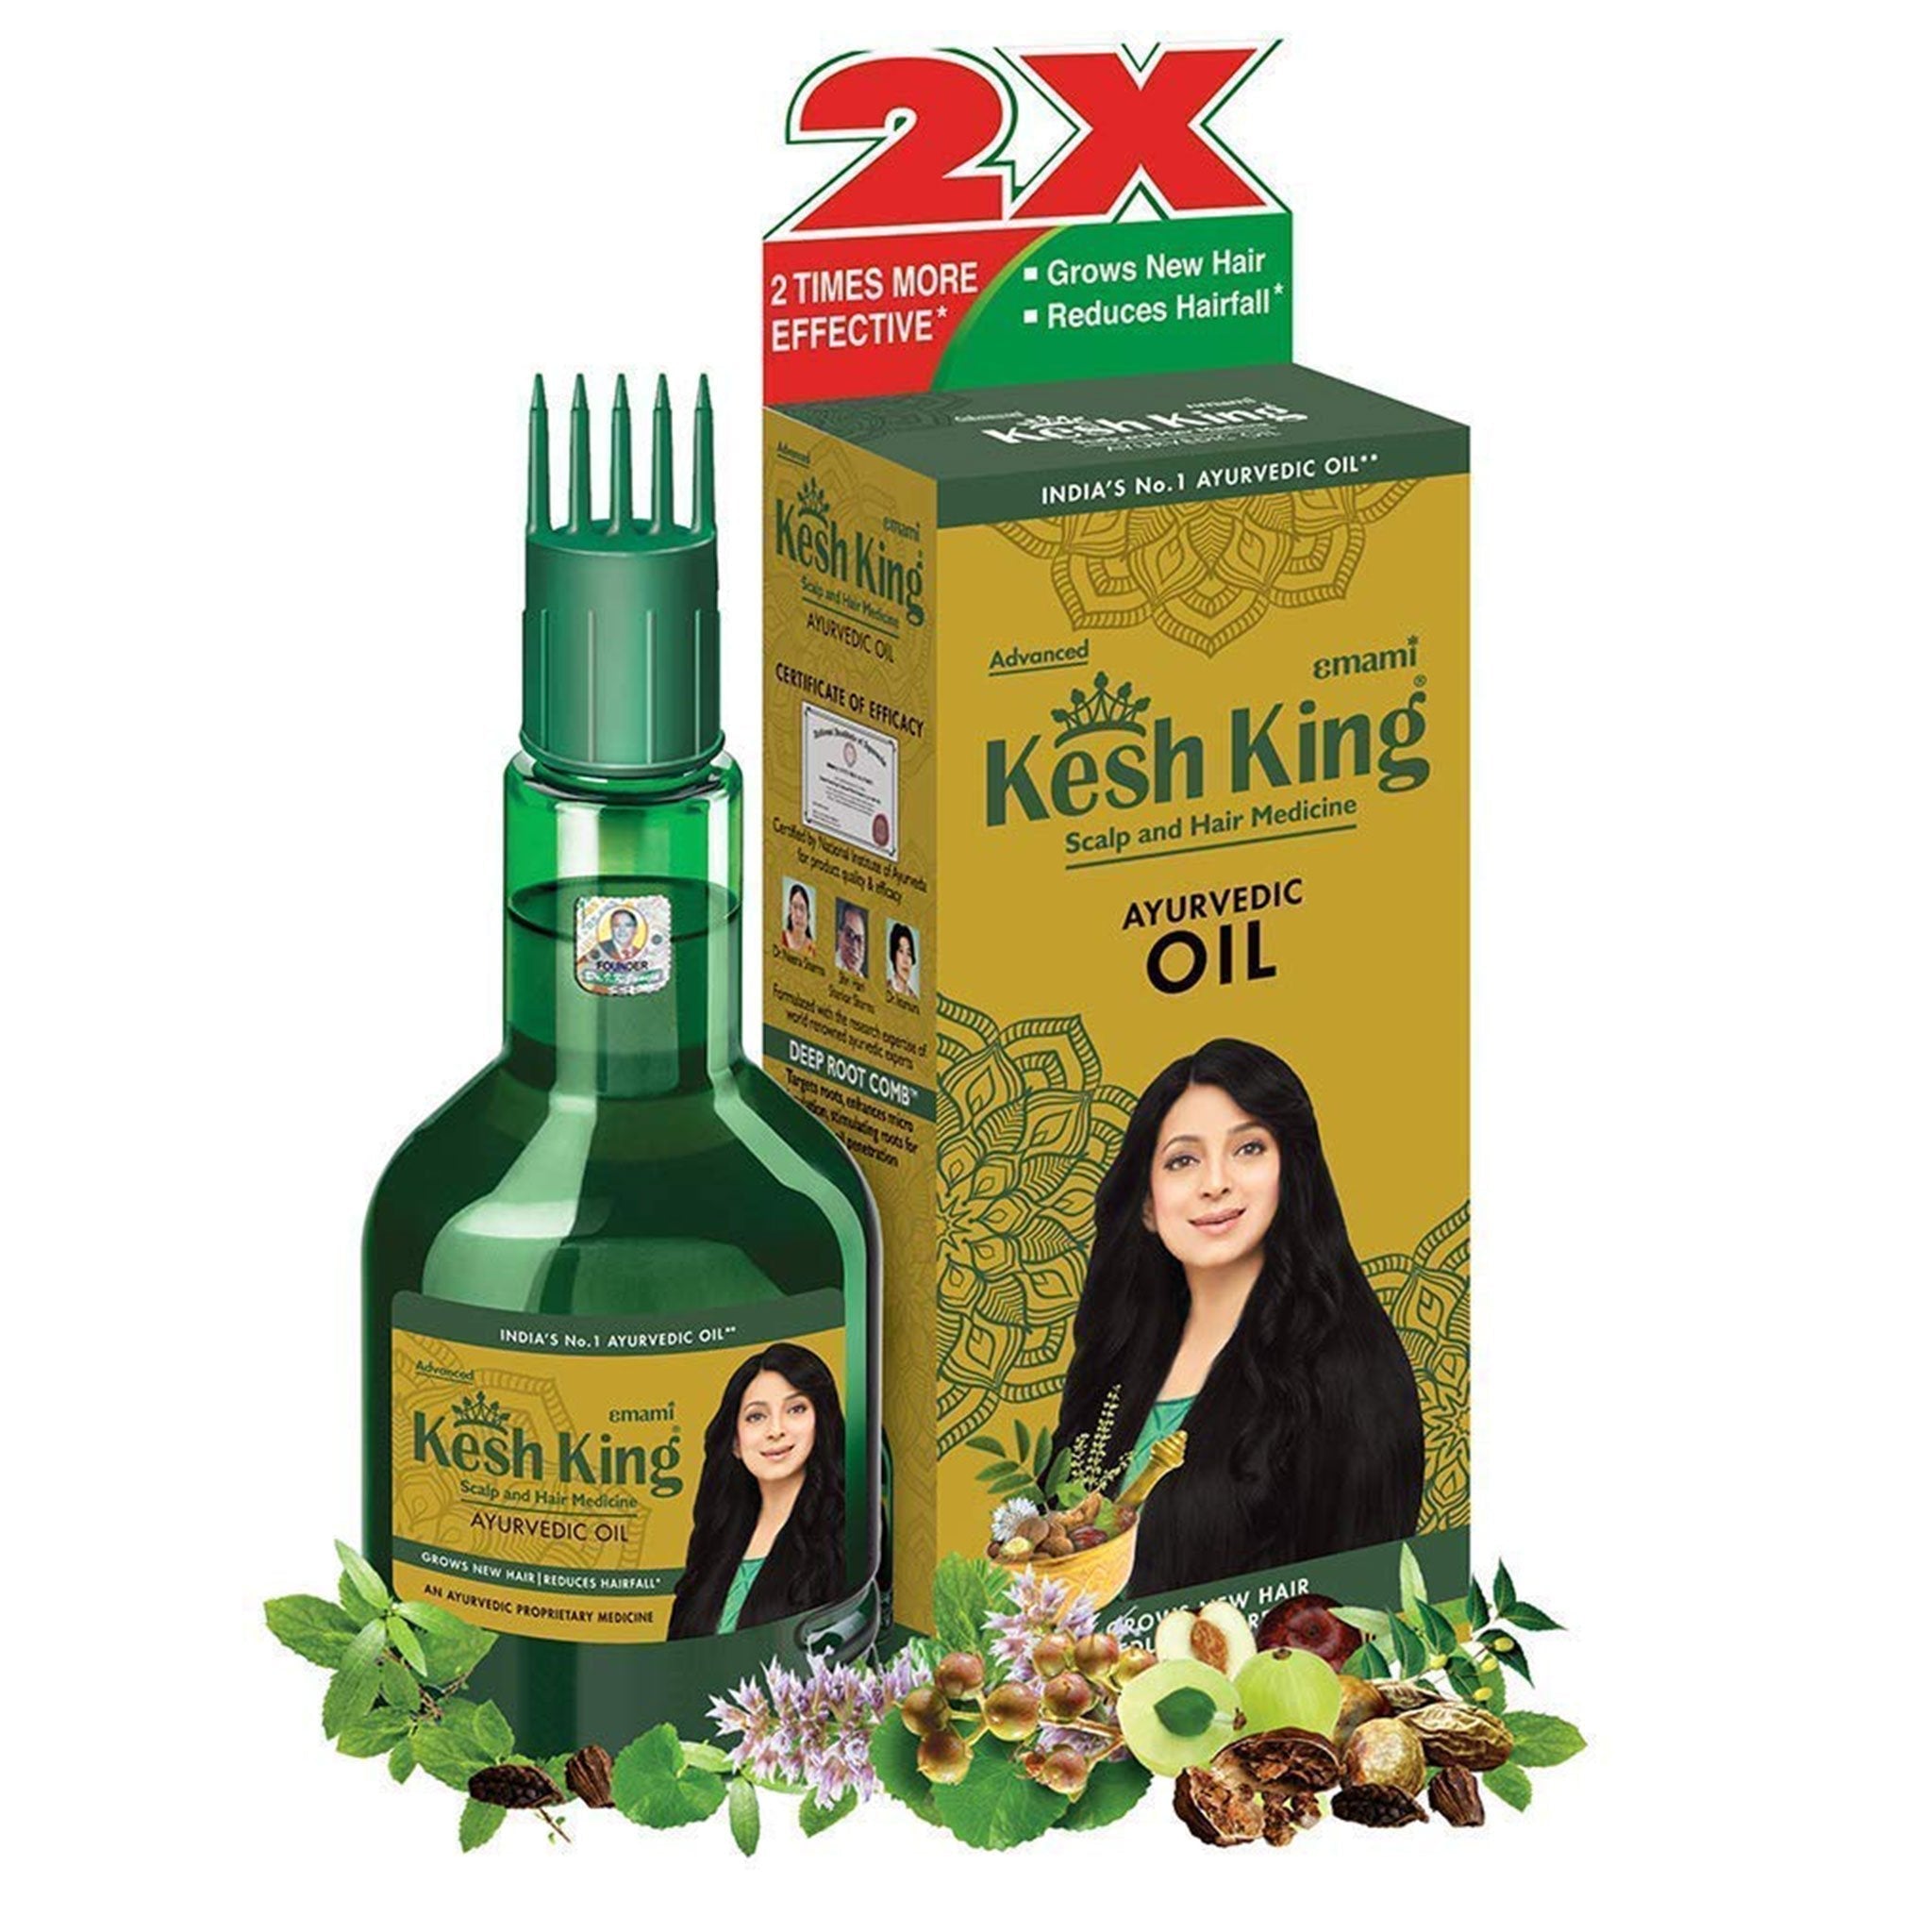 Emami Kesh King Ayurvedic Scalp and Hair Medicine Ayurvedic Oil 300ml